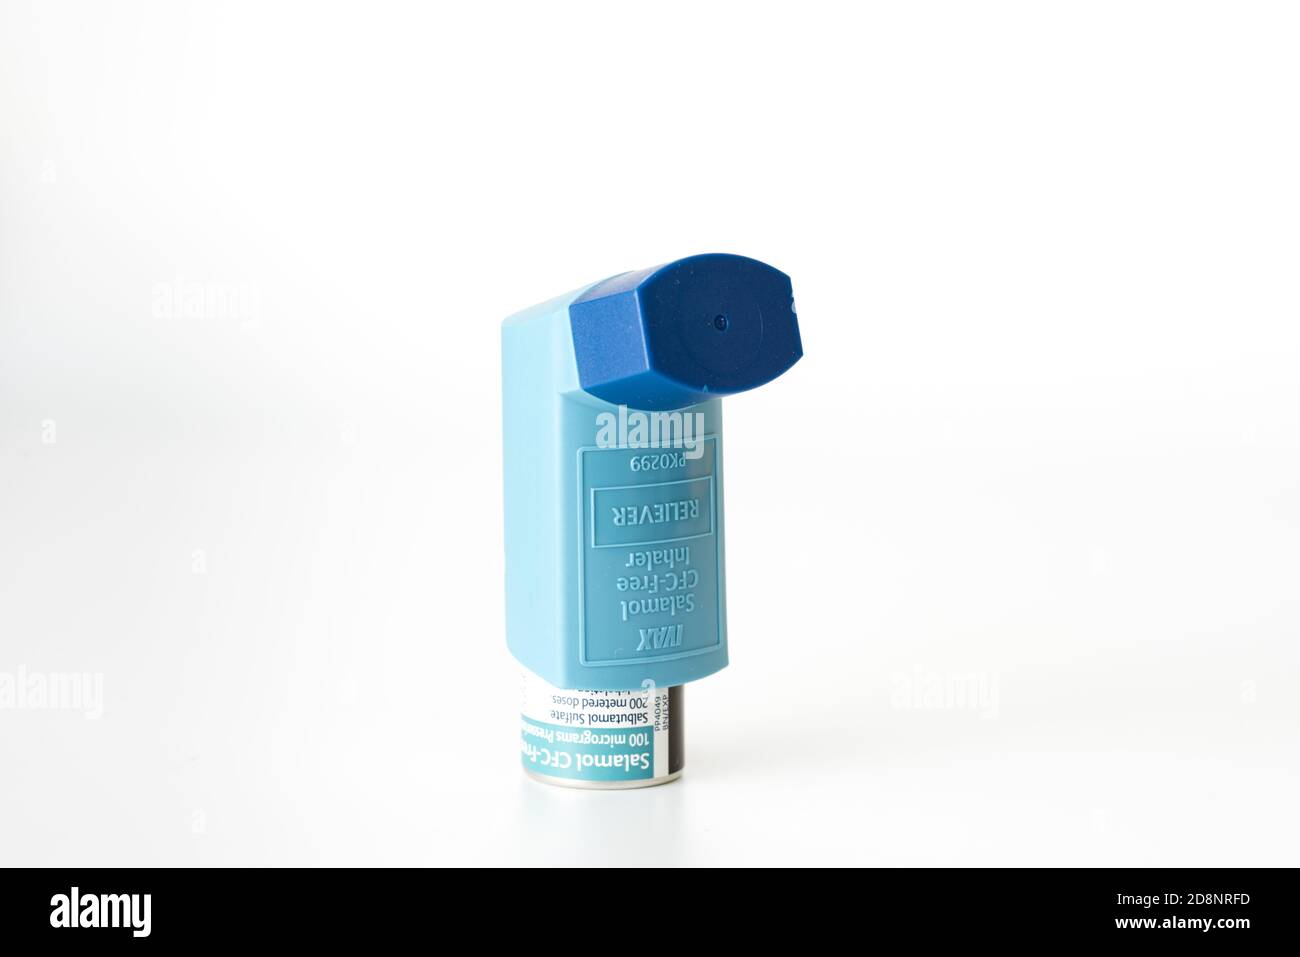 Salamol Easi-Breathe CFC-Free Inhaler with white background Stock Photo